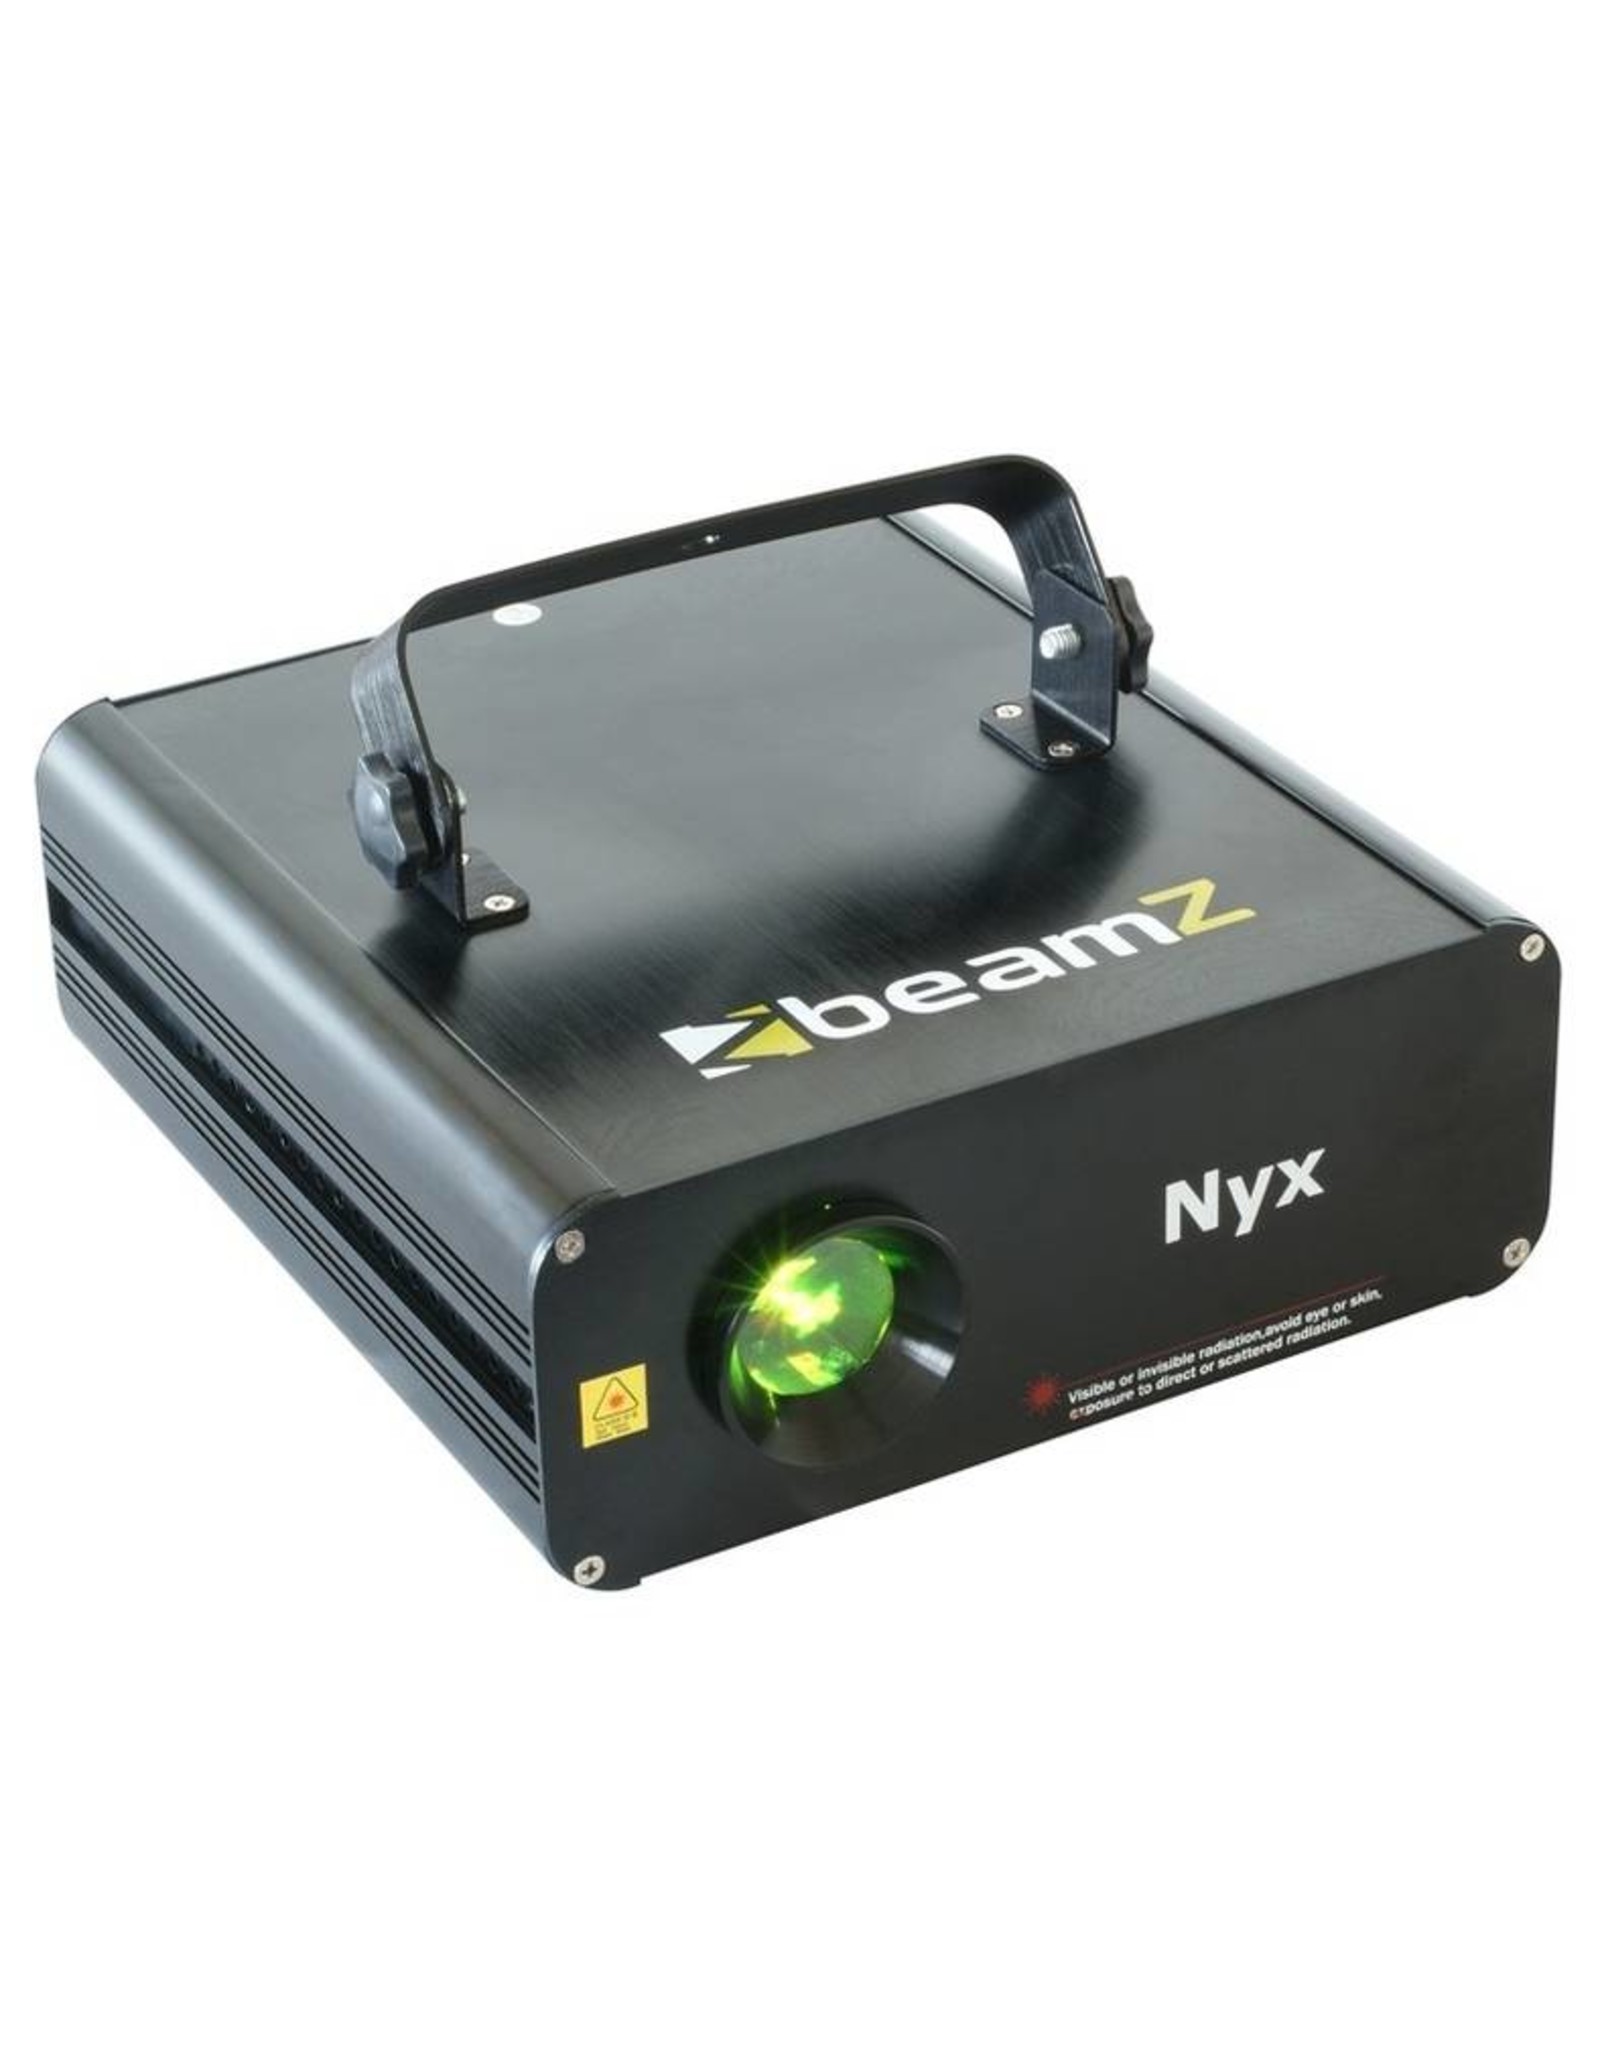 Beamz Nyx Animatie Laser R/G DMX ILDA winkel model